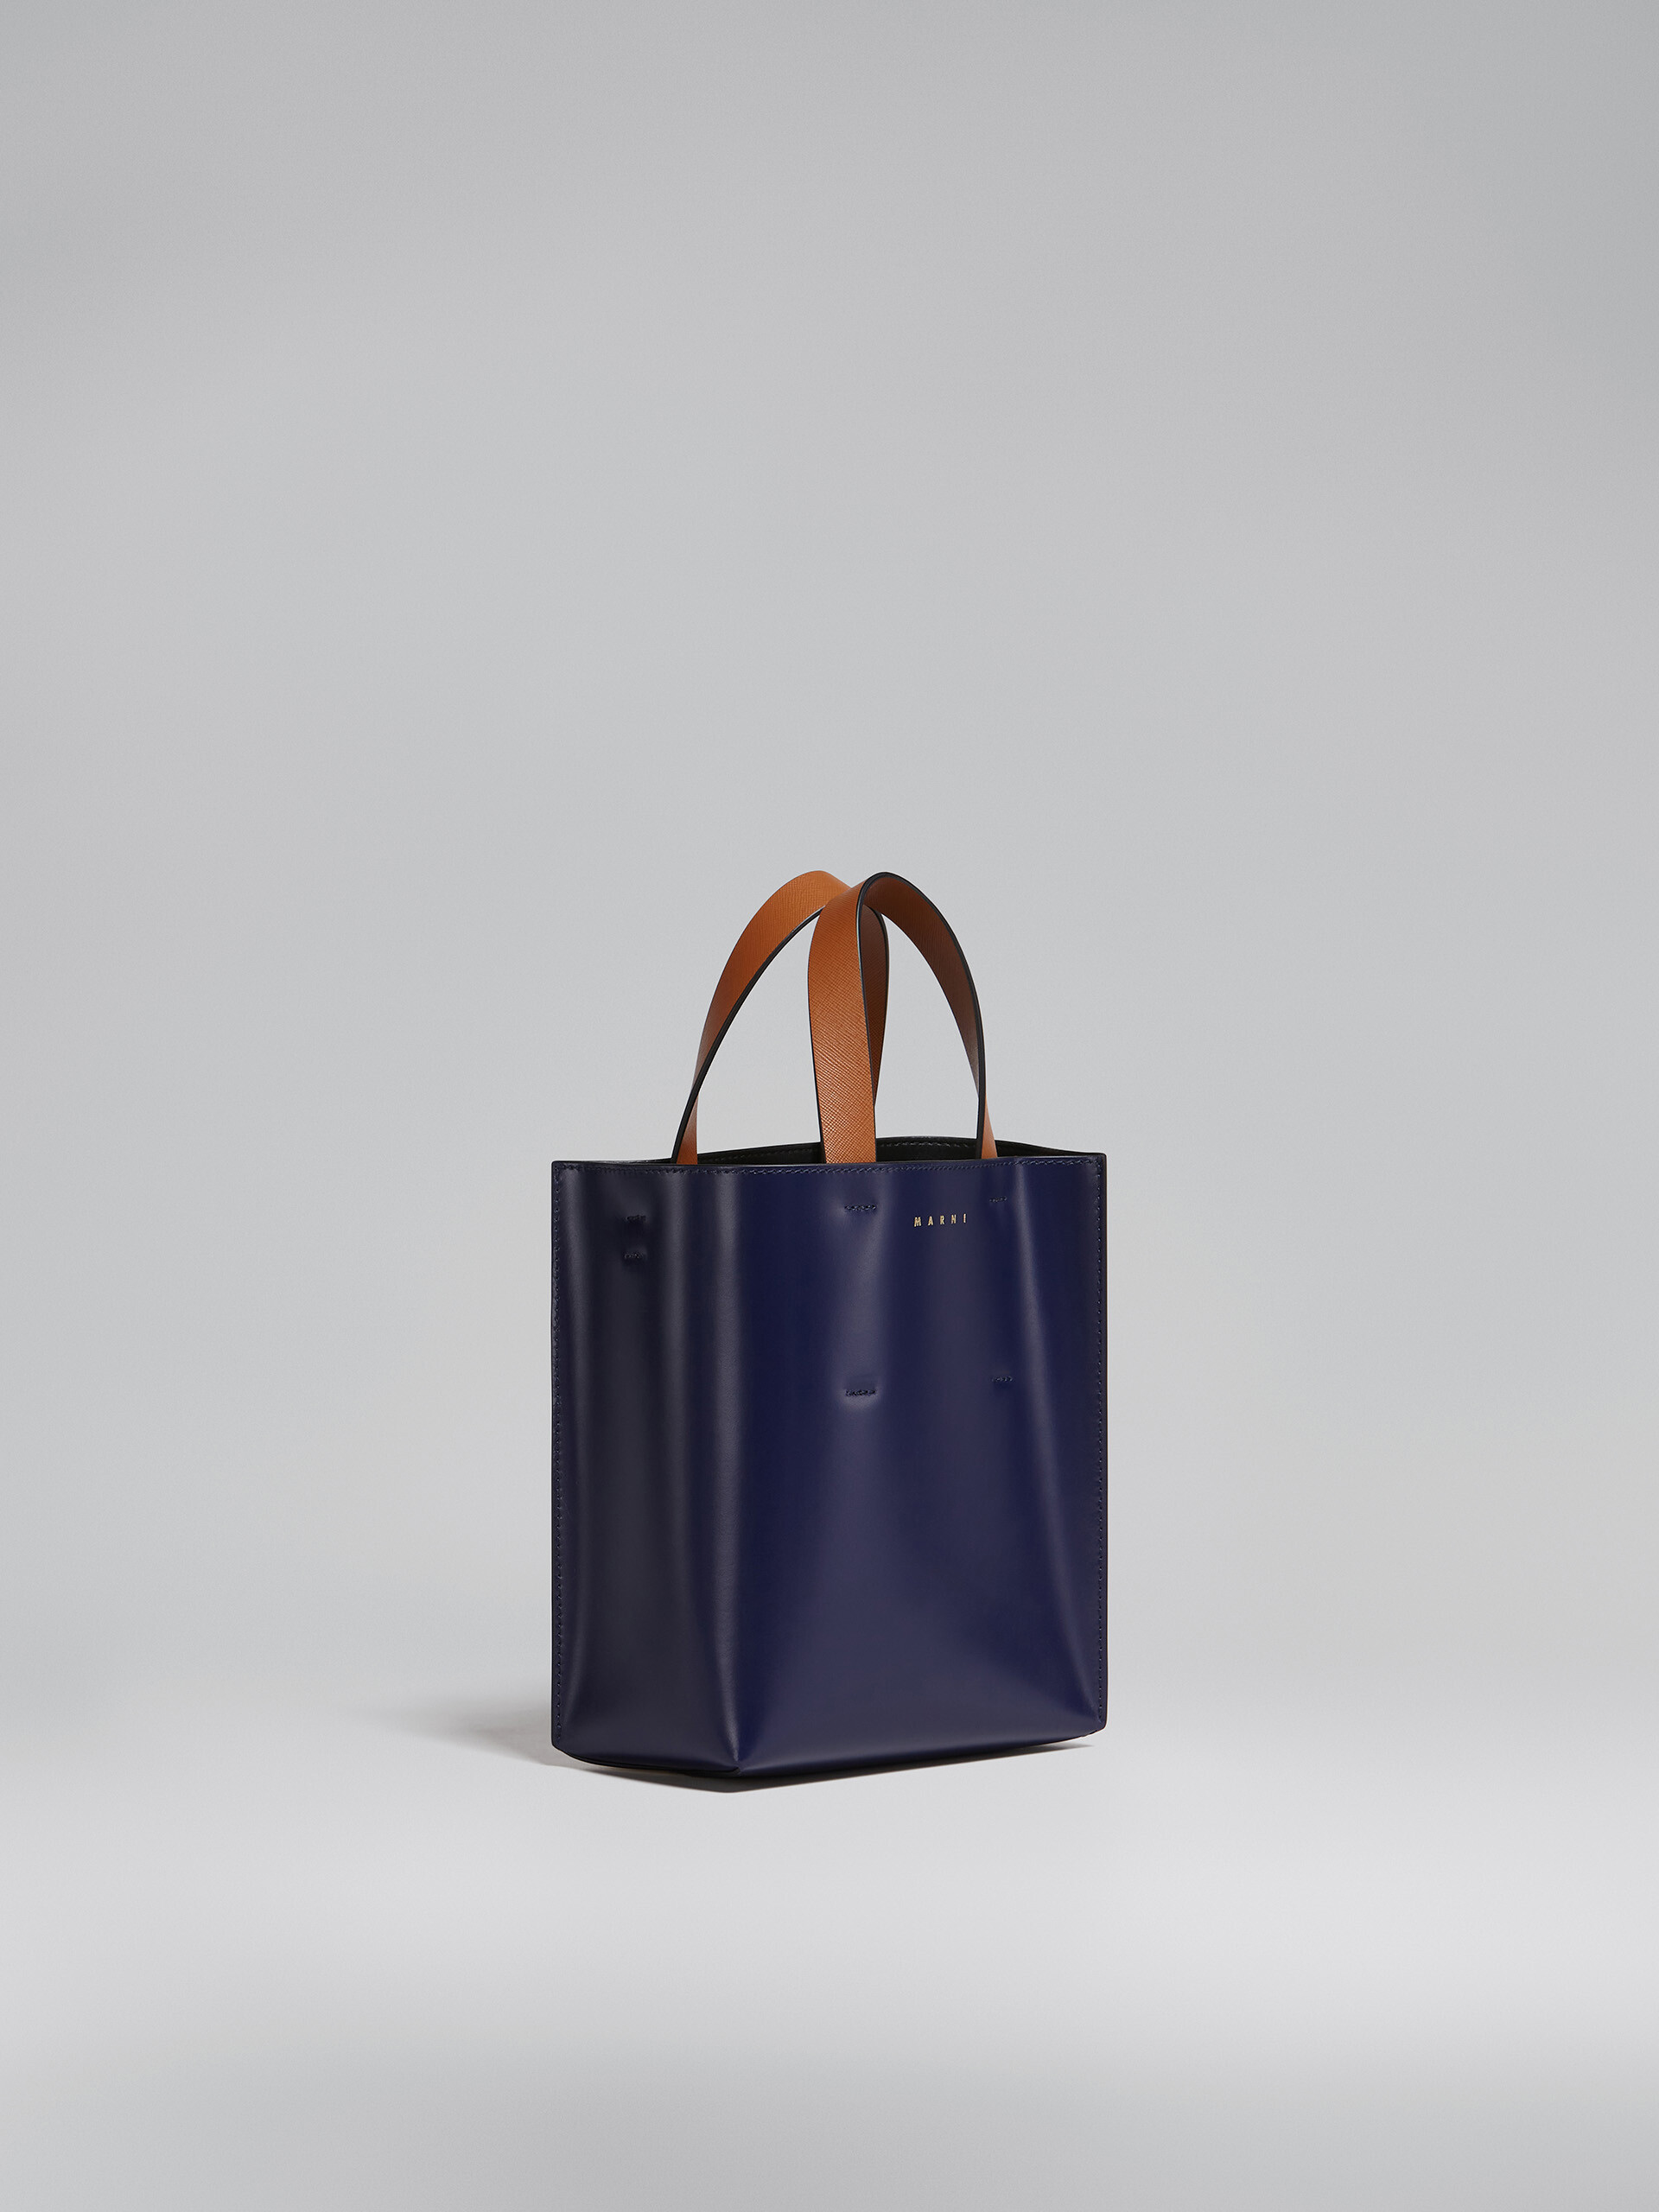 Mini-sac MUSEO en cuir bleu et blanc - Sacs cabas - Image 6